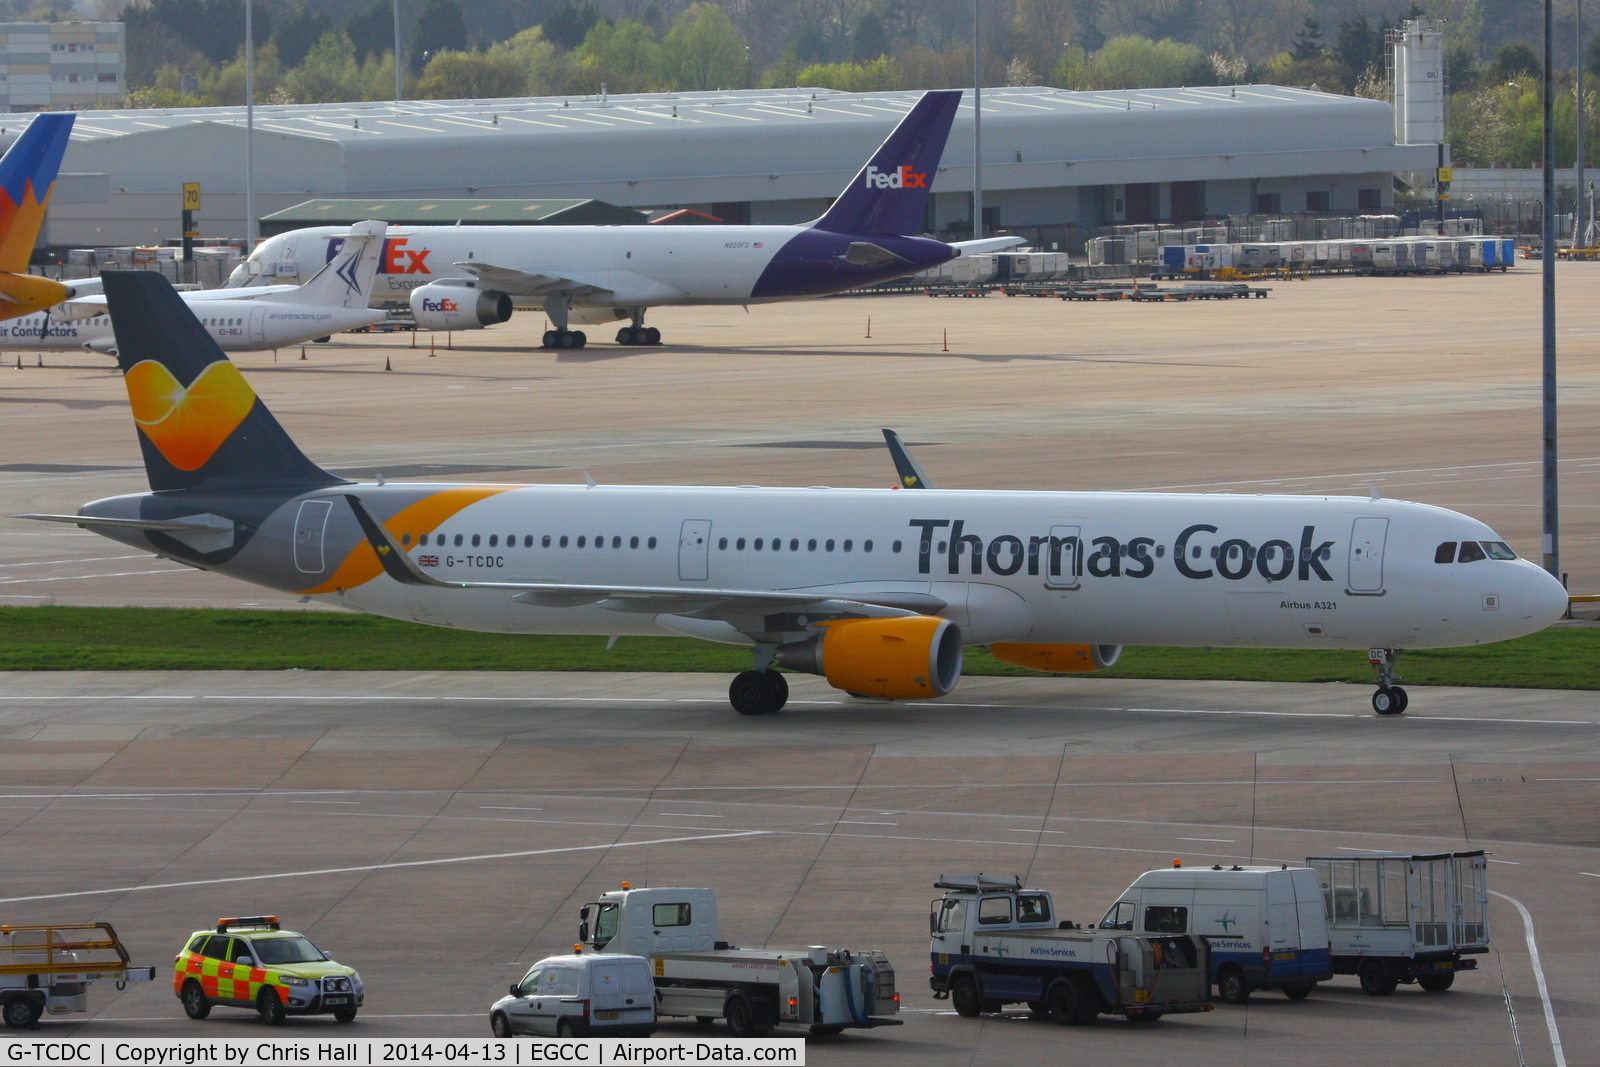 G-TCDC, 2013 Airbus A321-211 C/N 5872, Thomas Cook